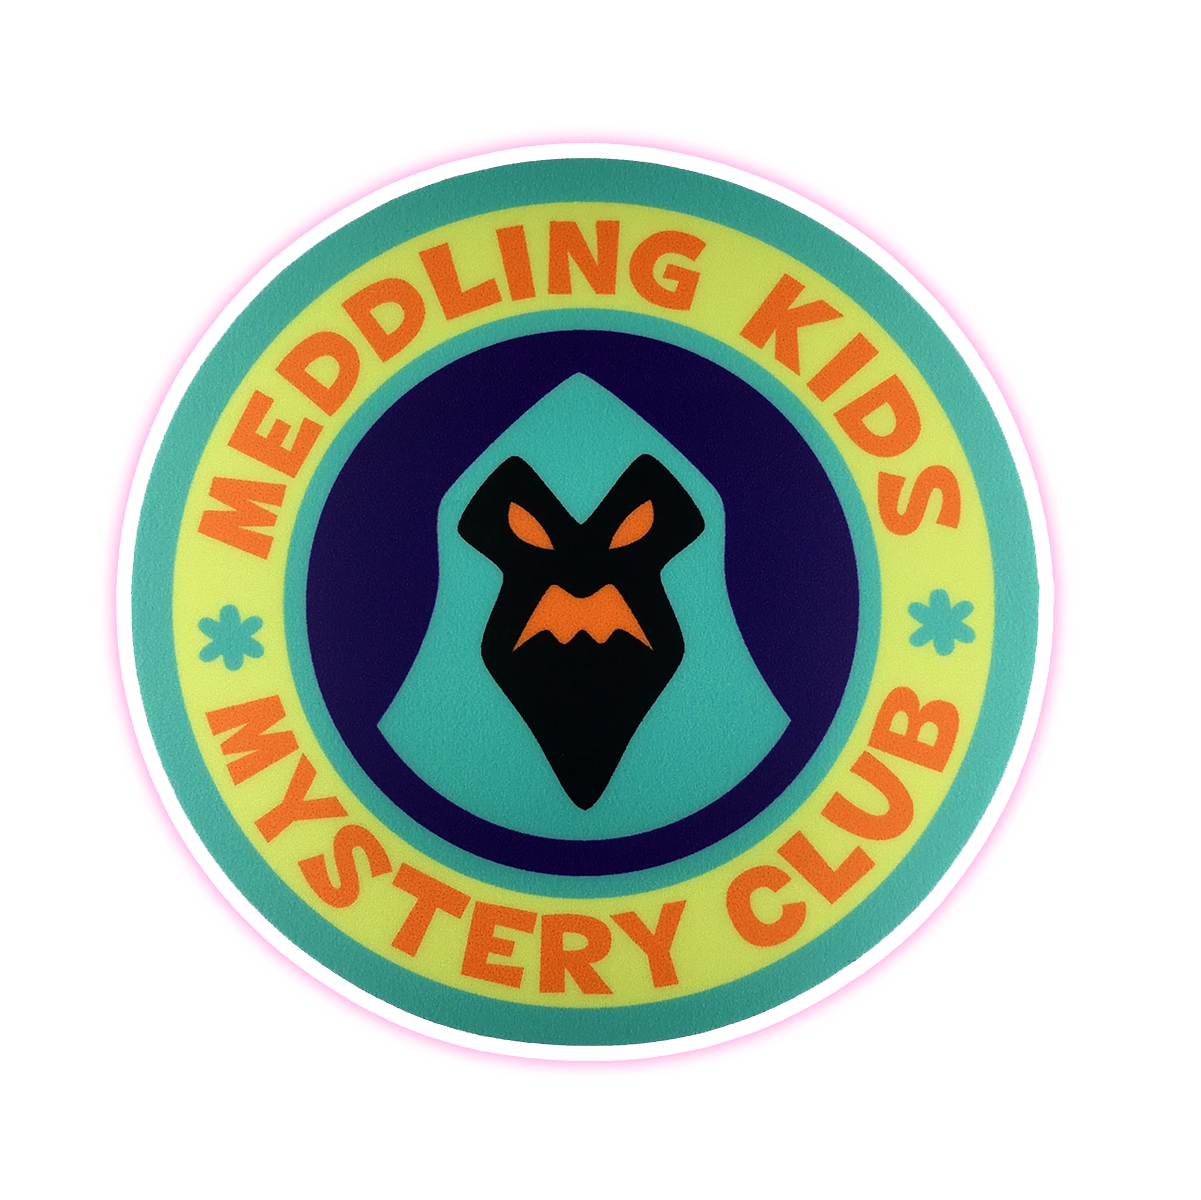 Scooby Doo Meddling Kids Mystery Club Die Cut Sticker (3918)